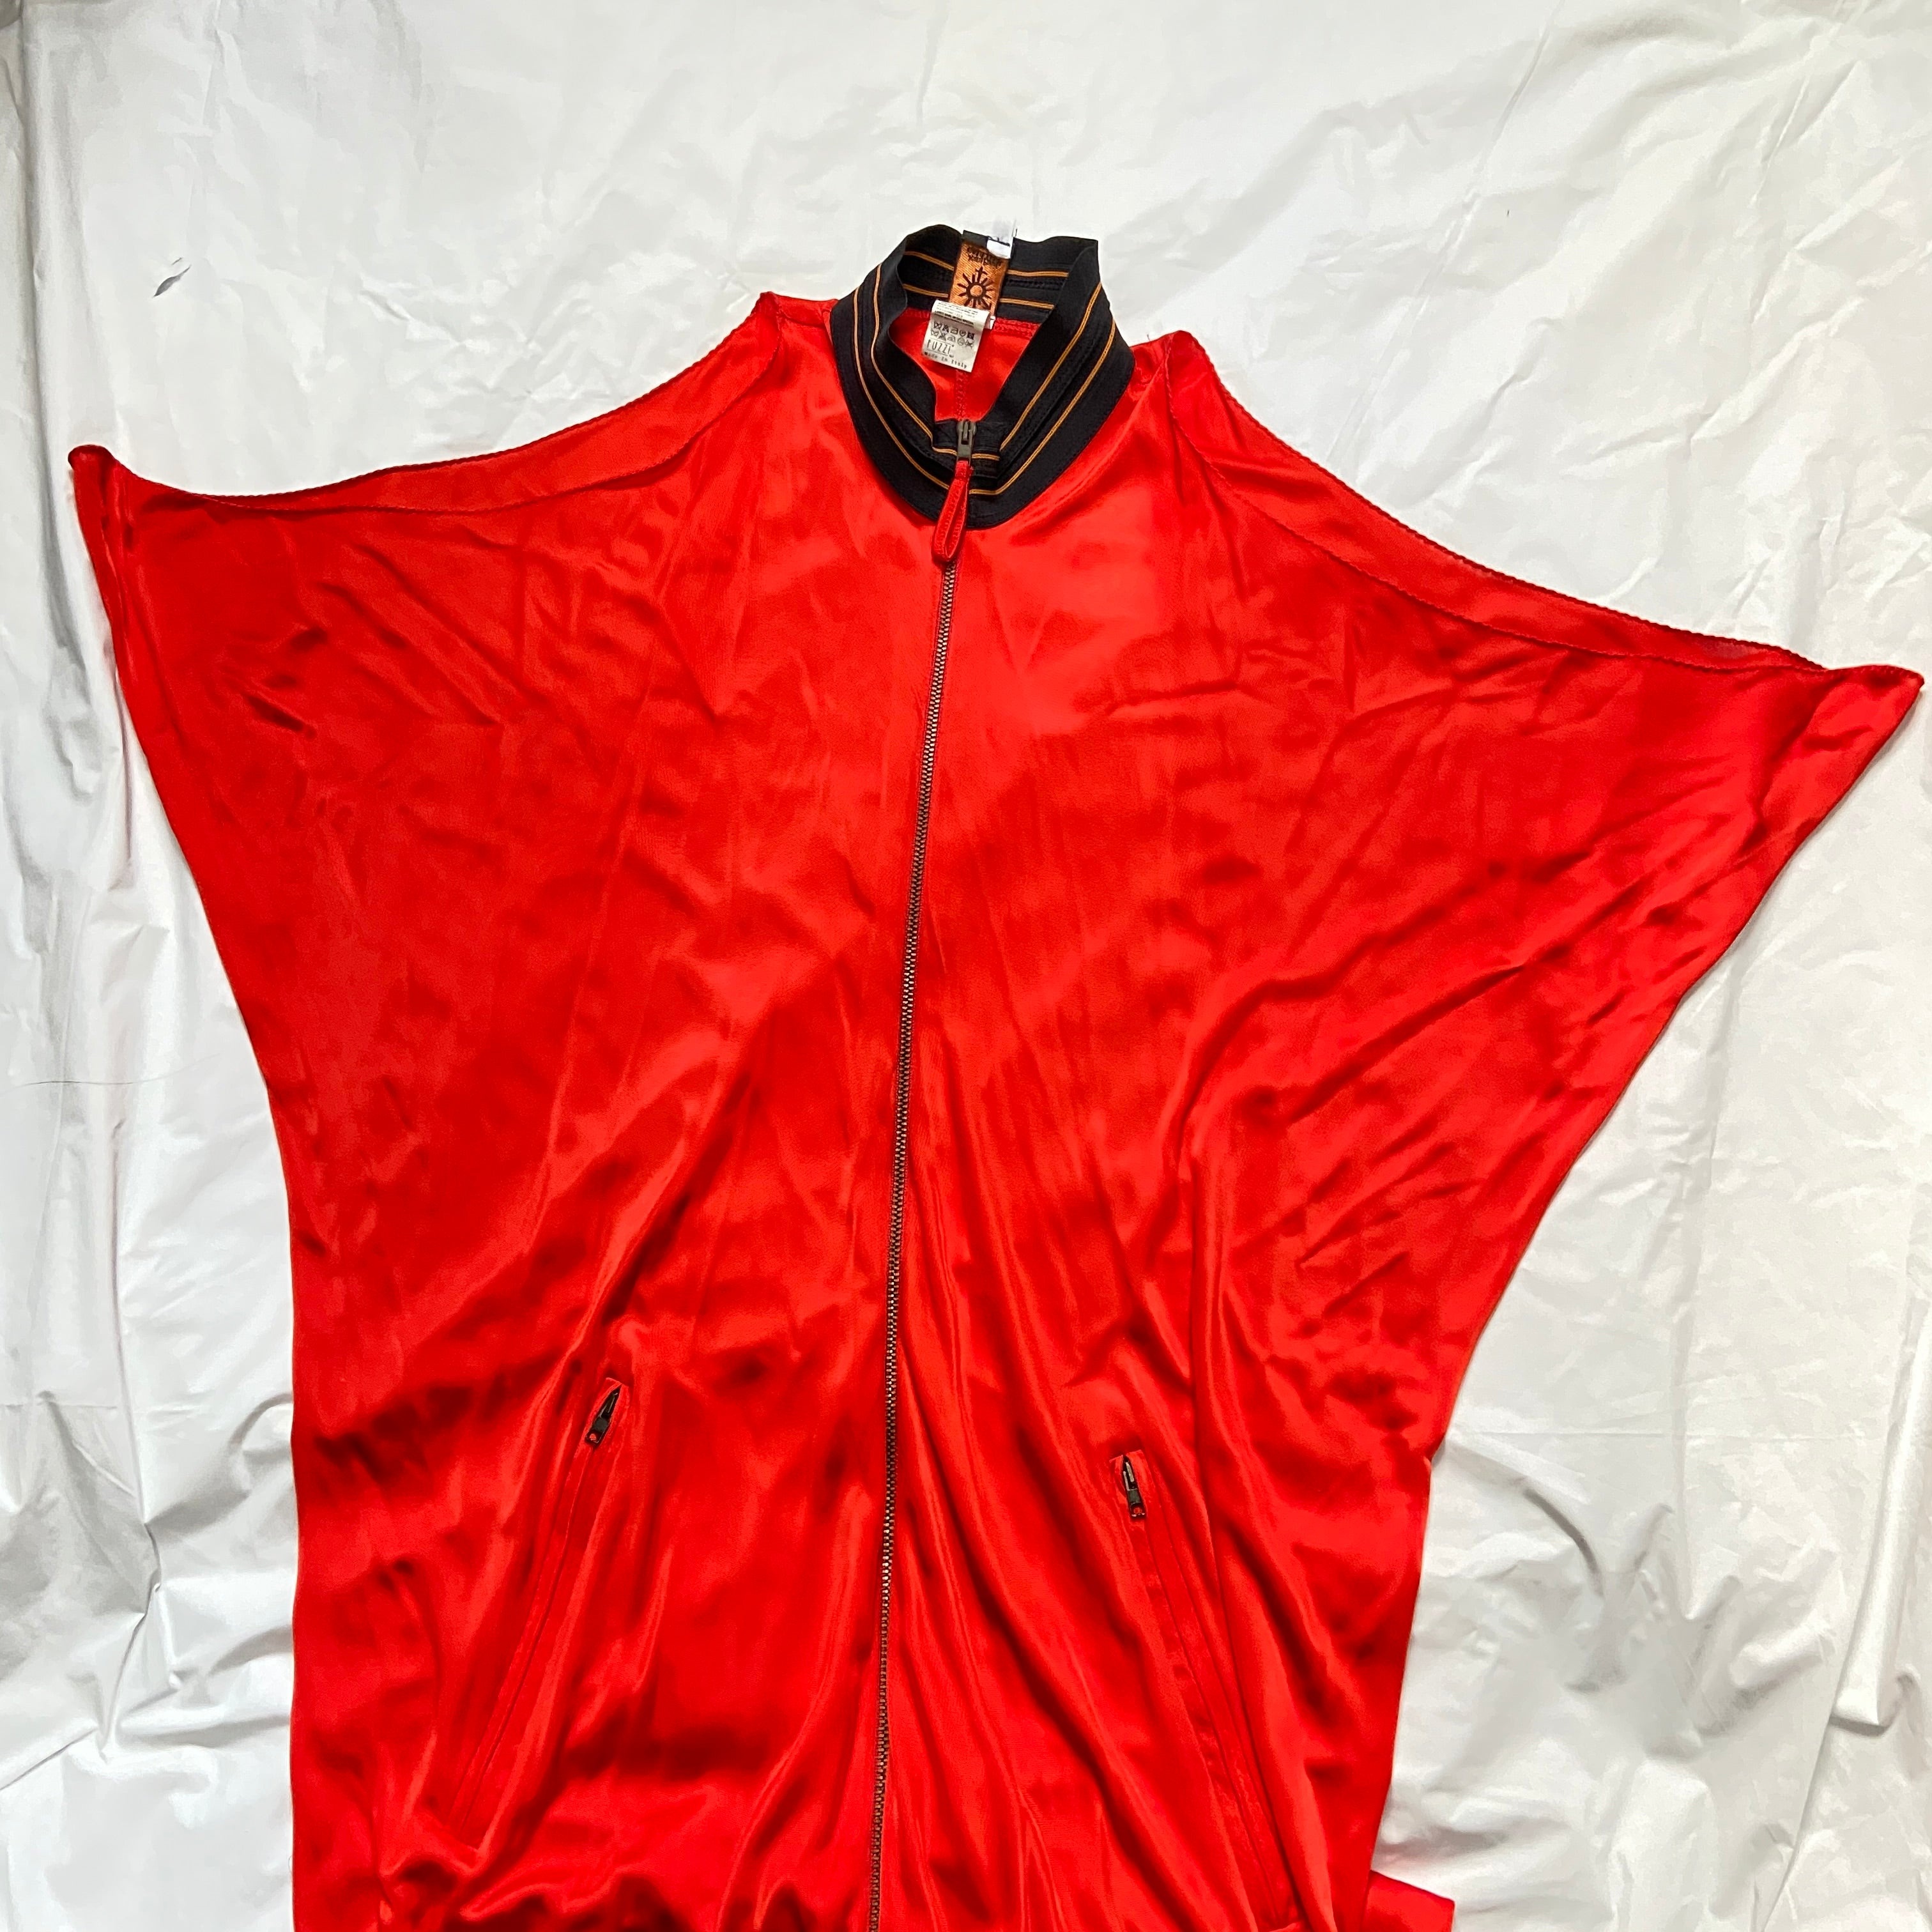 Jean Paul Gaultier fall 2007 red bomber zip dress - 6